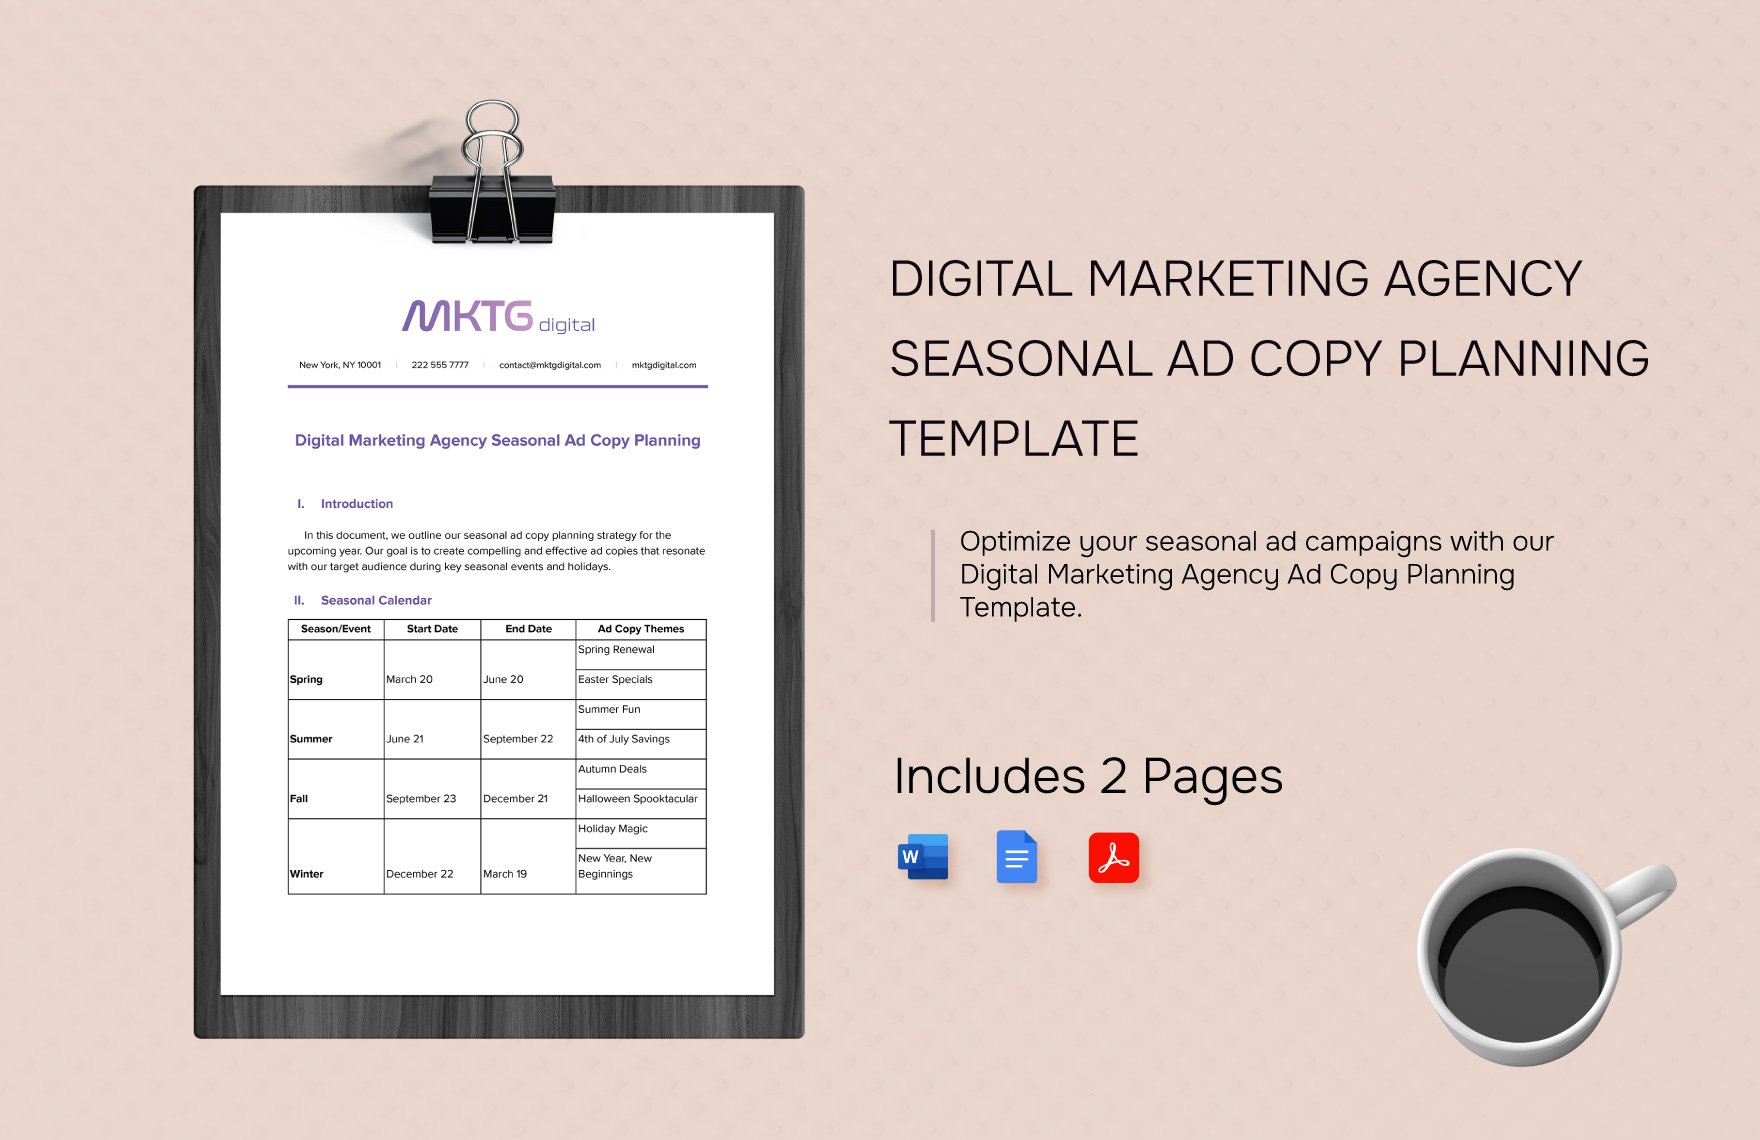 Digital Marketing Agency Seasonal Ad Copy Planning Template